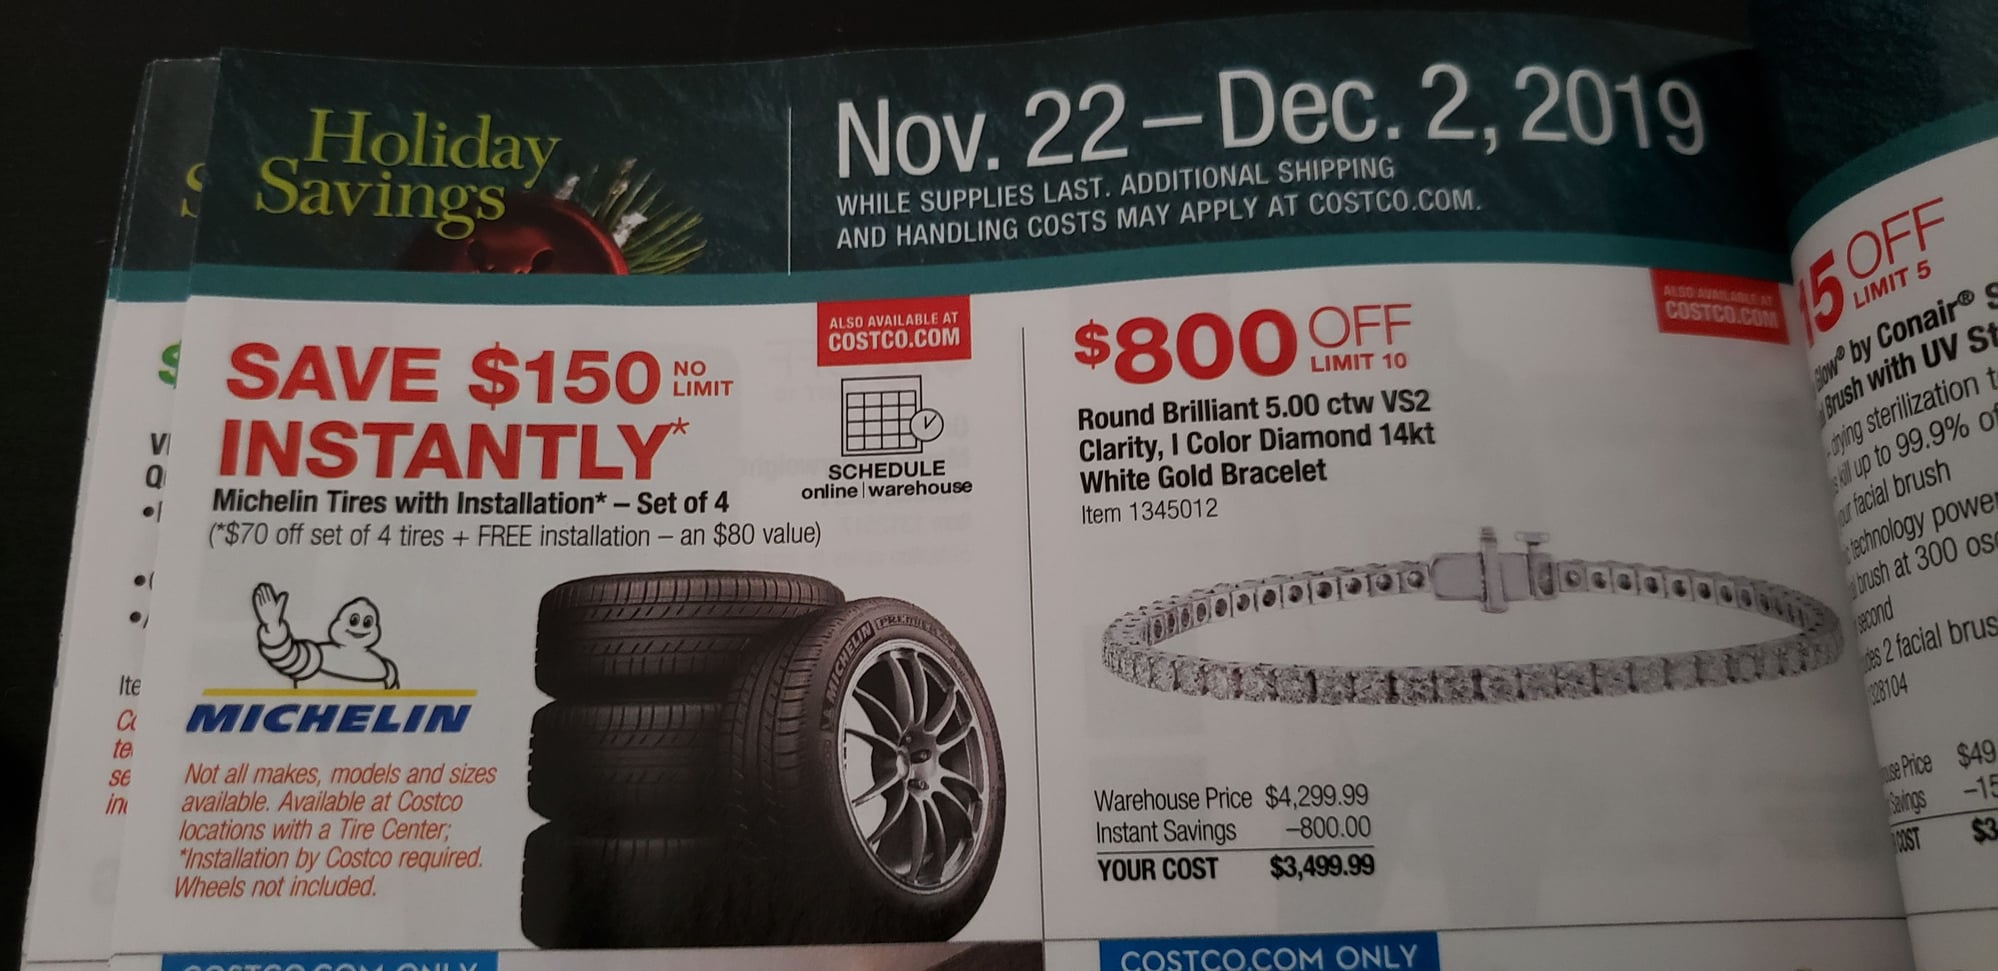 Black Friday 2019 Tire Deals thread - Page 2 - S2KI Honda S2000 Forums